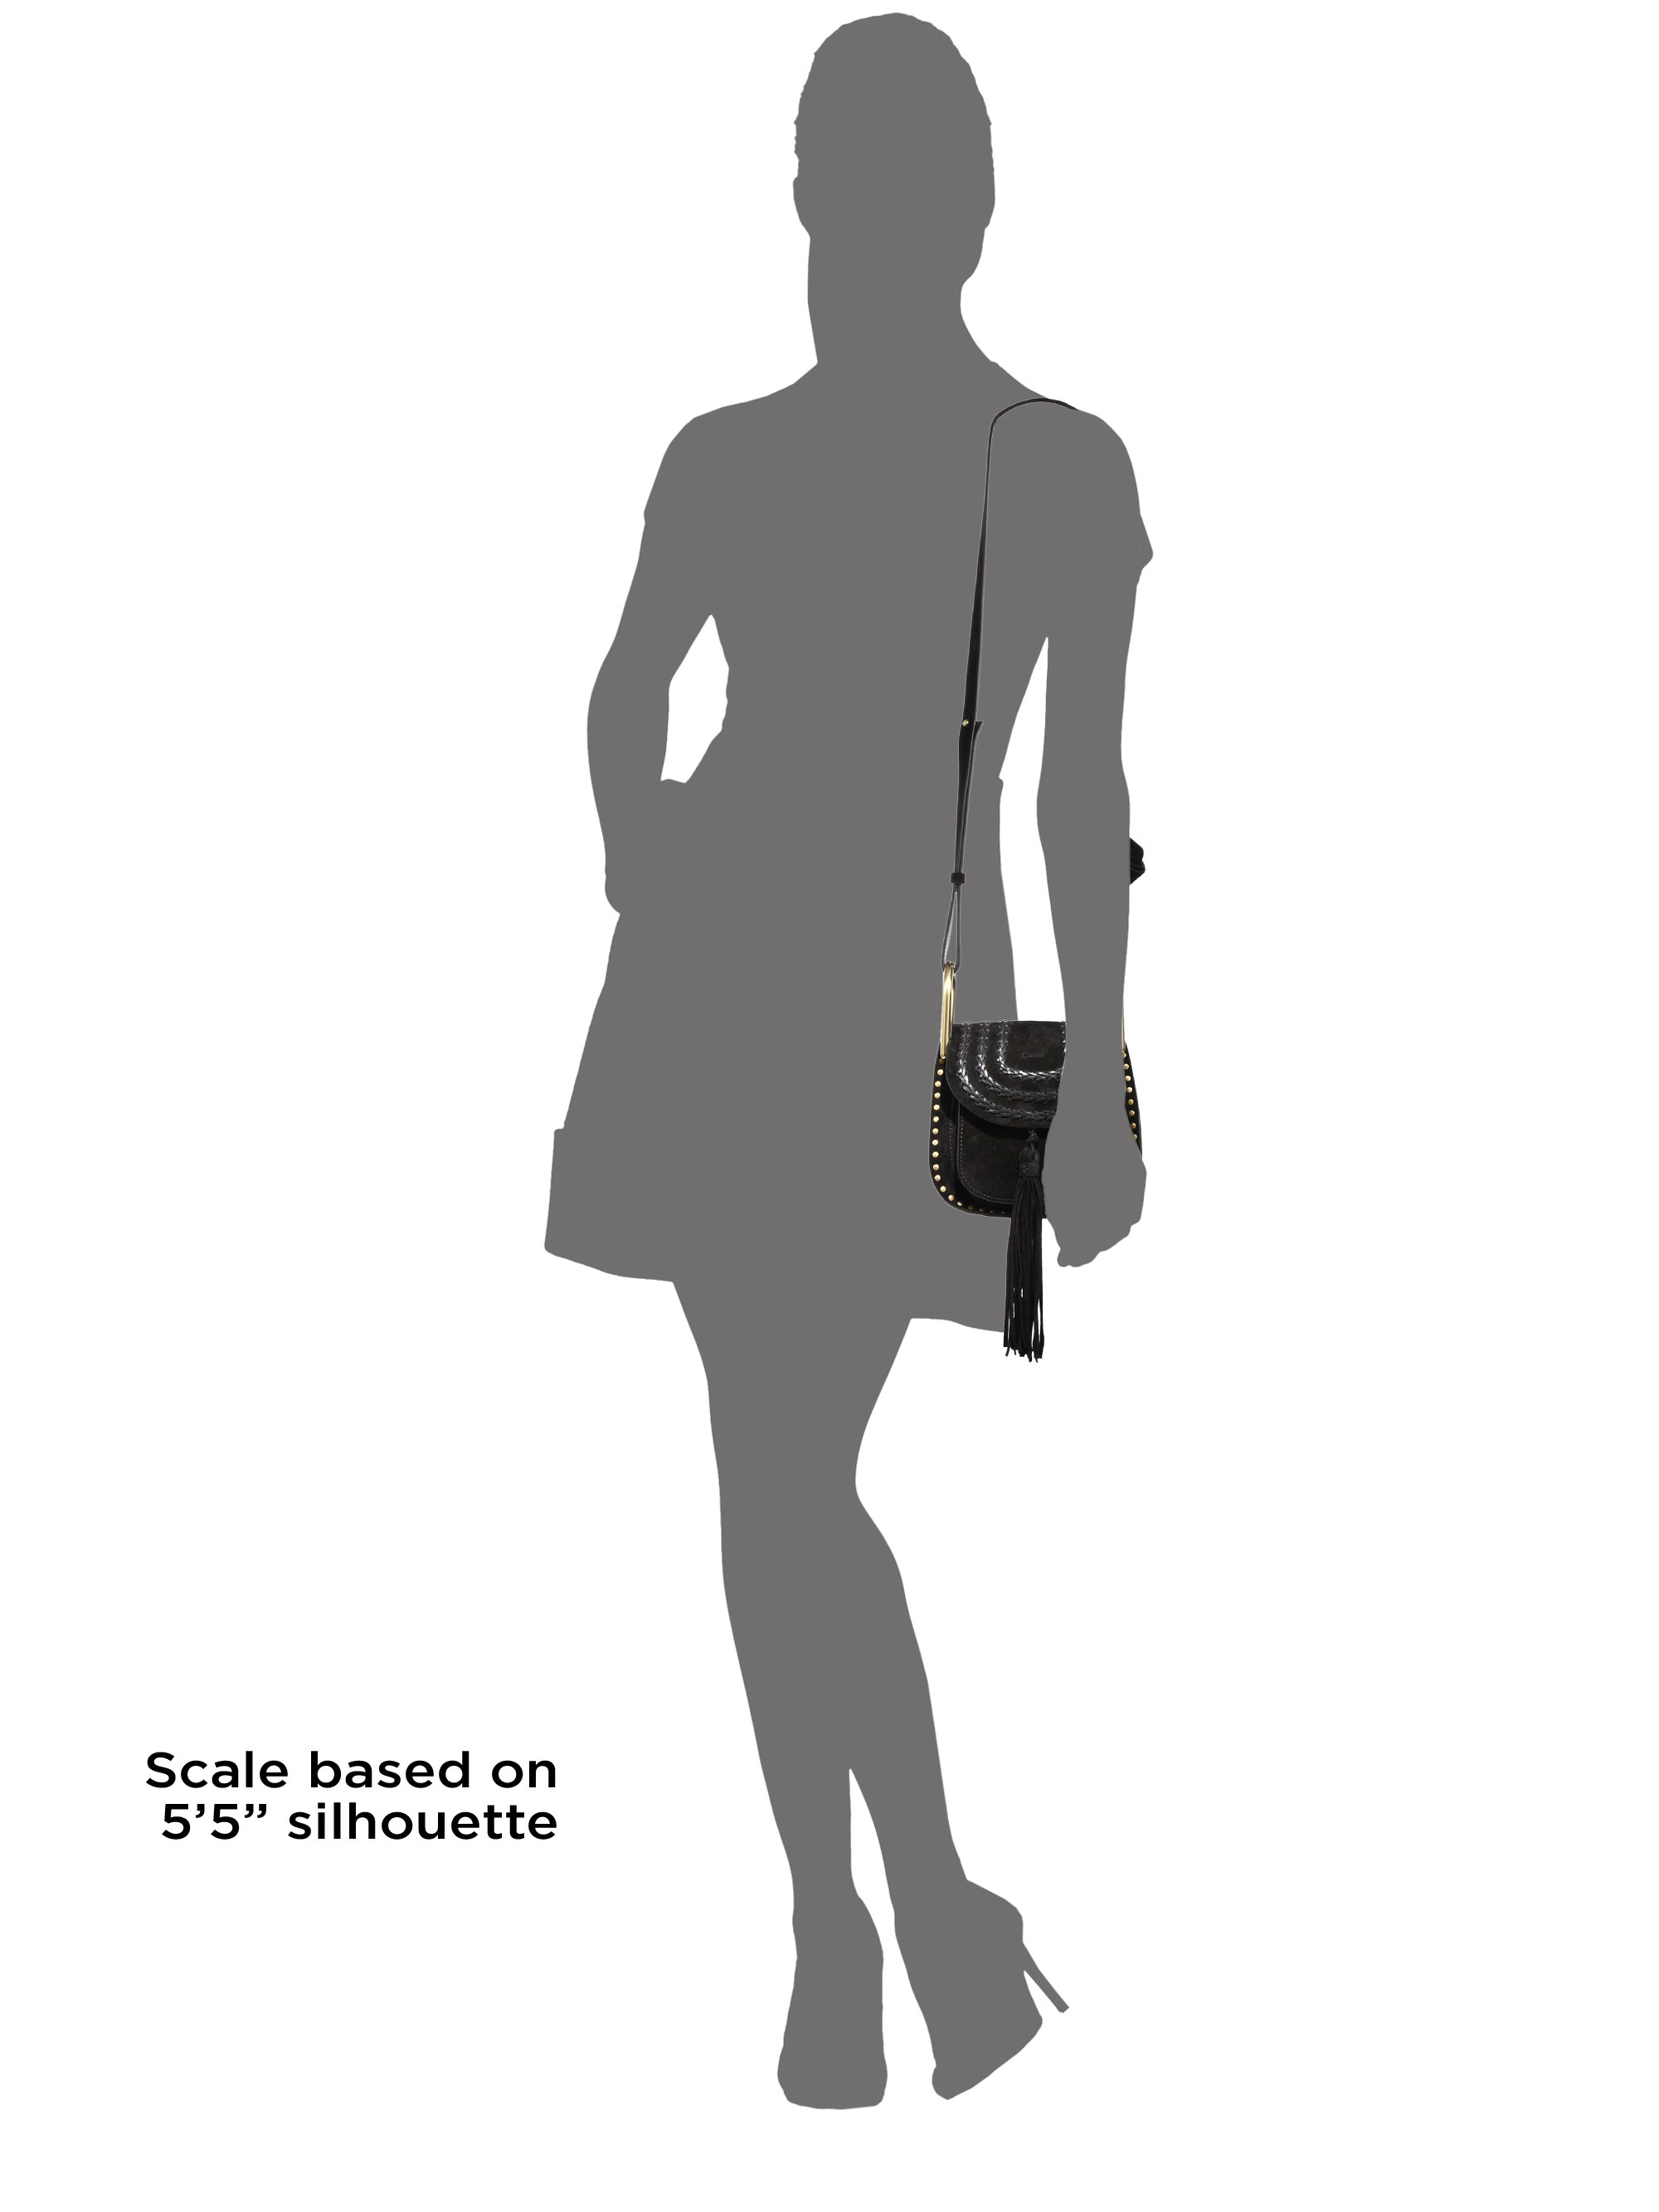 Chlo Hudson Mini Tasseled Leather Crossbody Bag in Black | Lyst